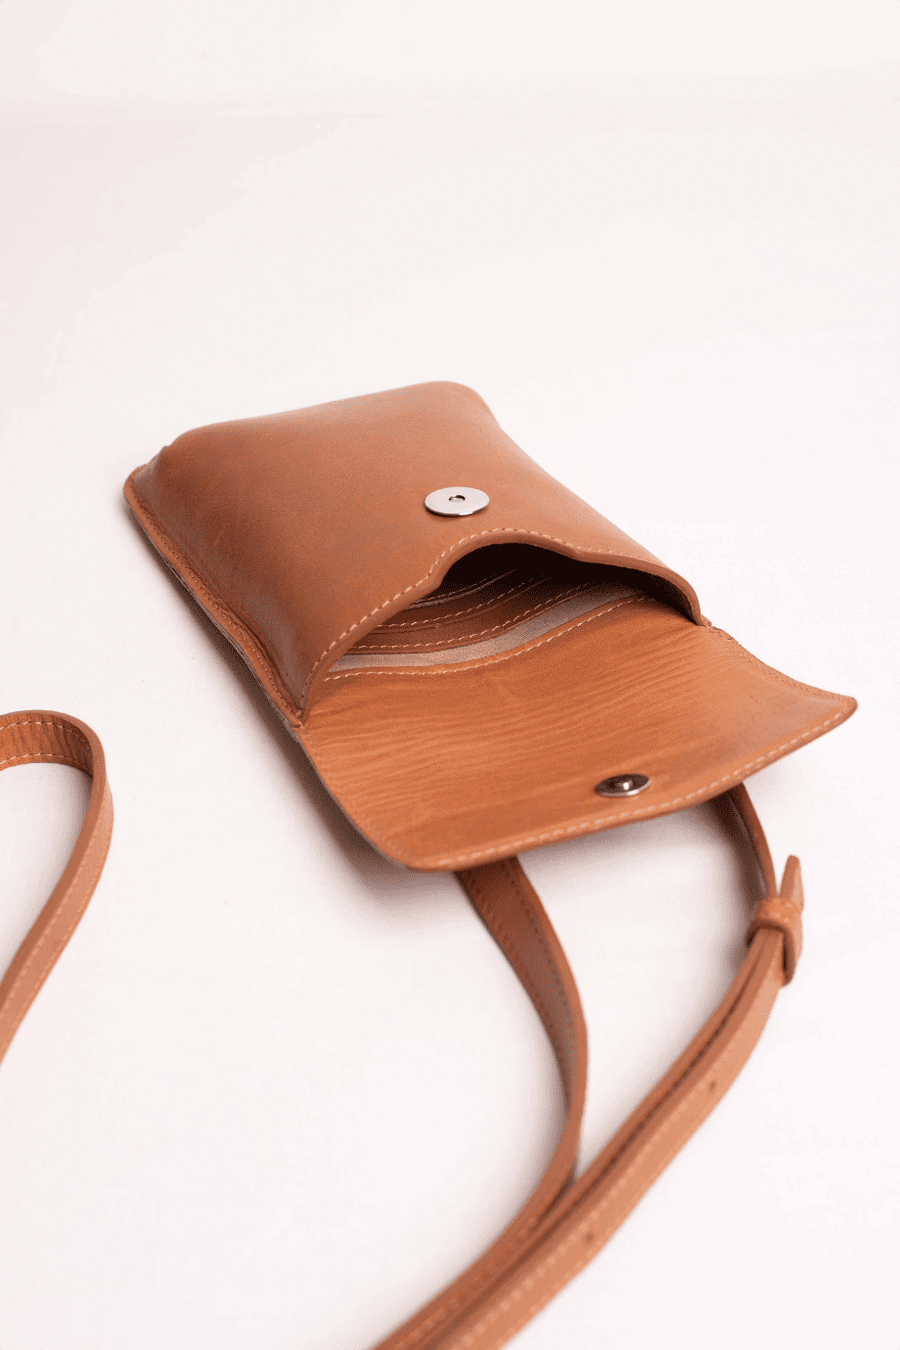 Mini leather bag. Shoulder bag. Full grain leather bag. Vegetable tanned leather purse.